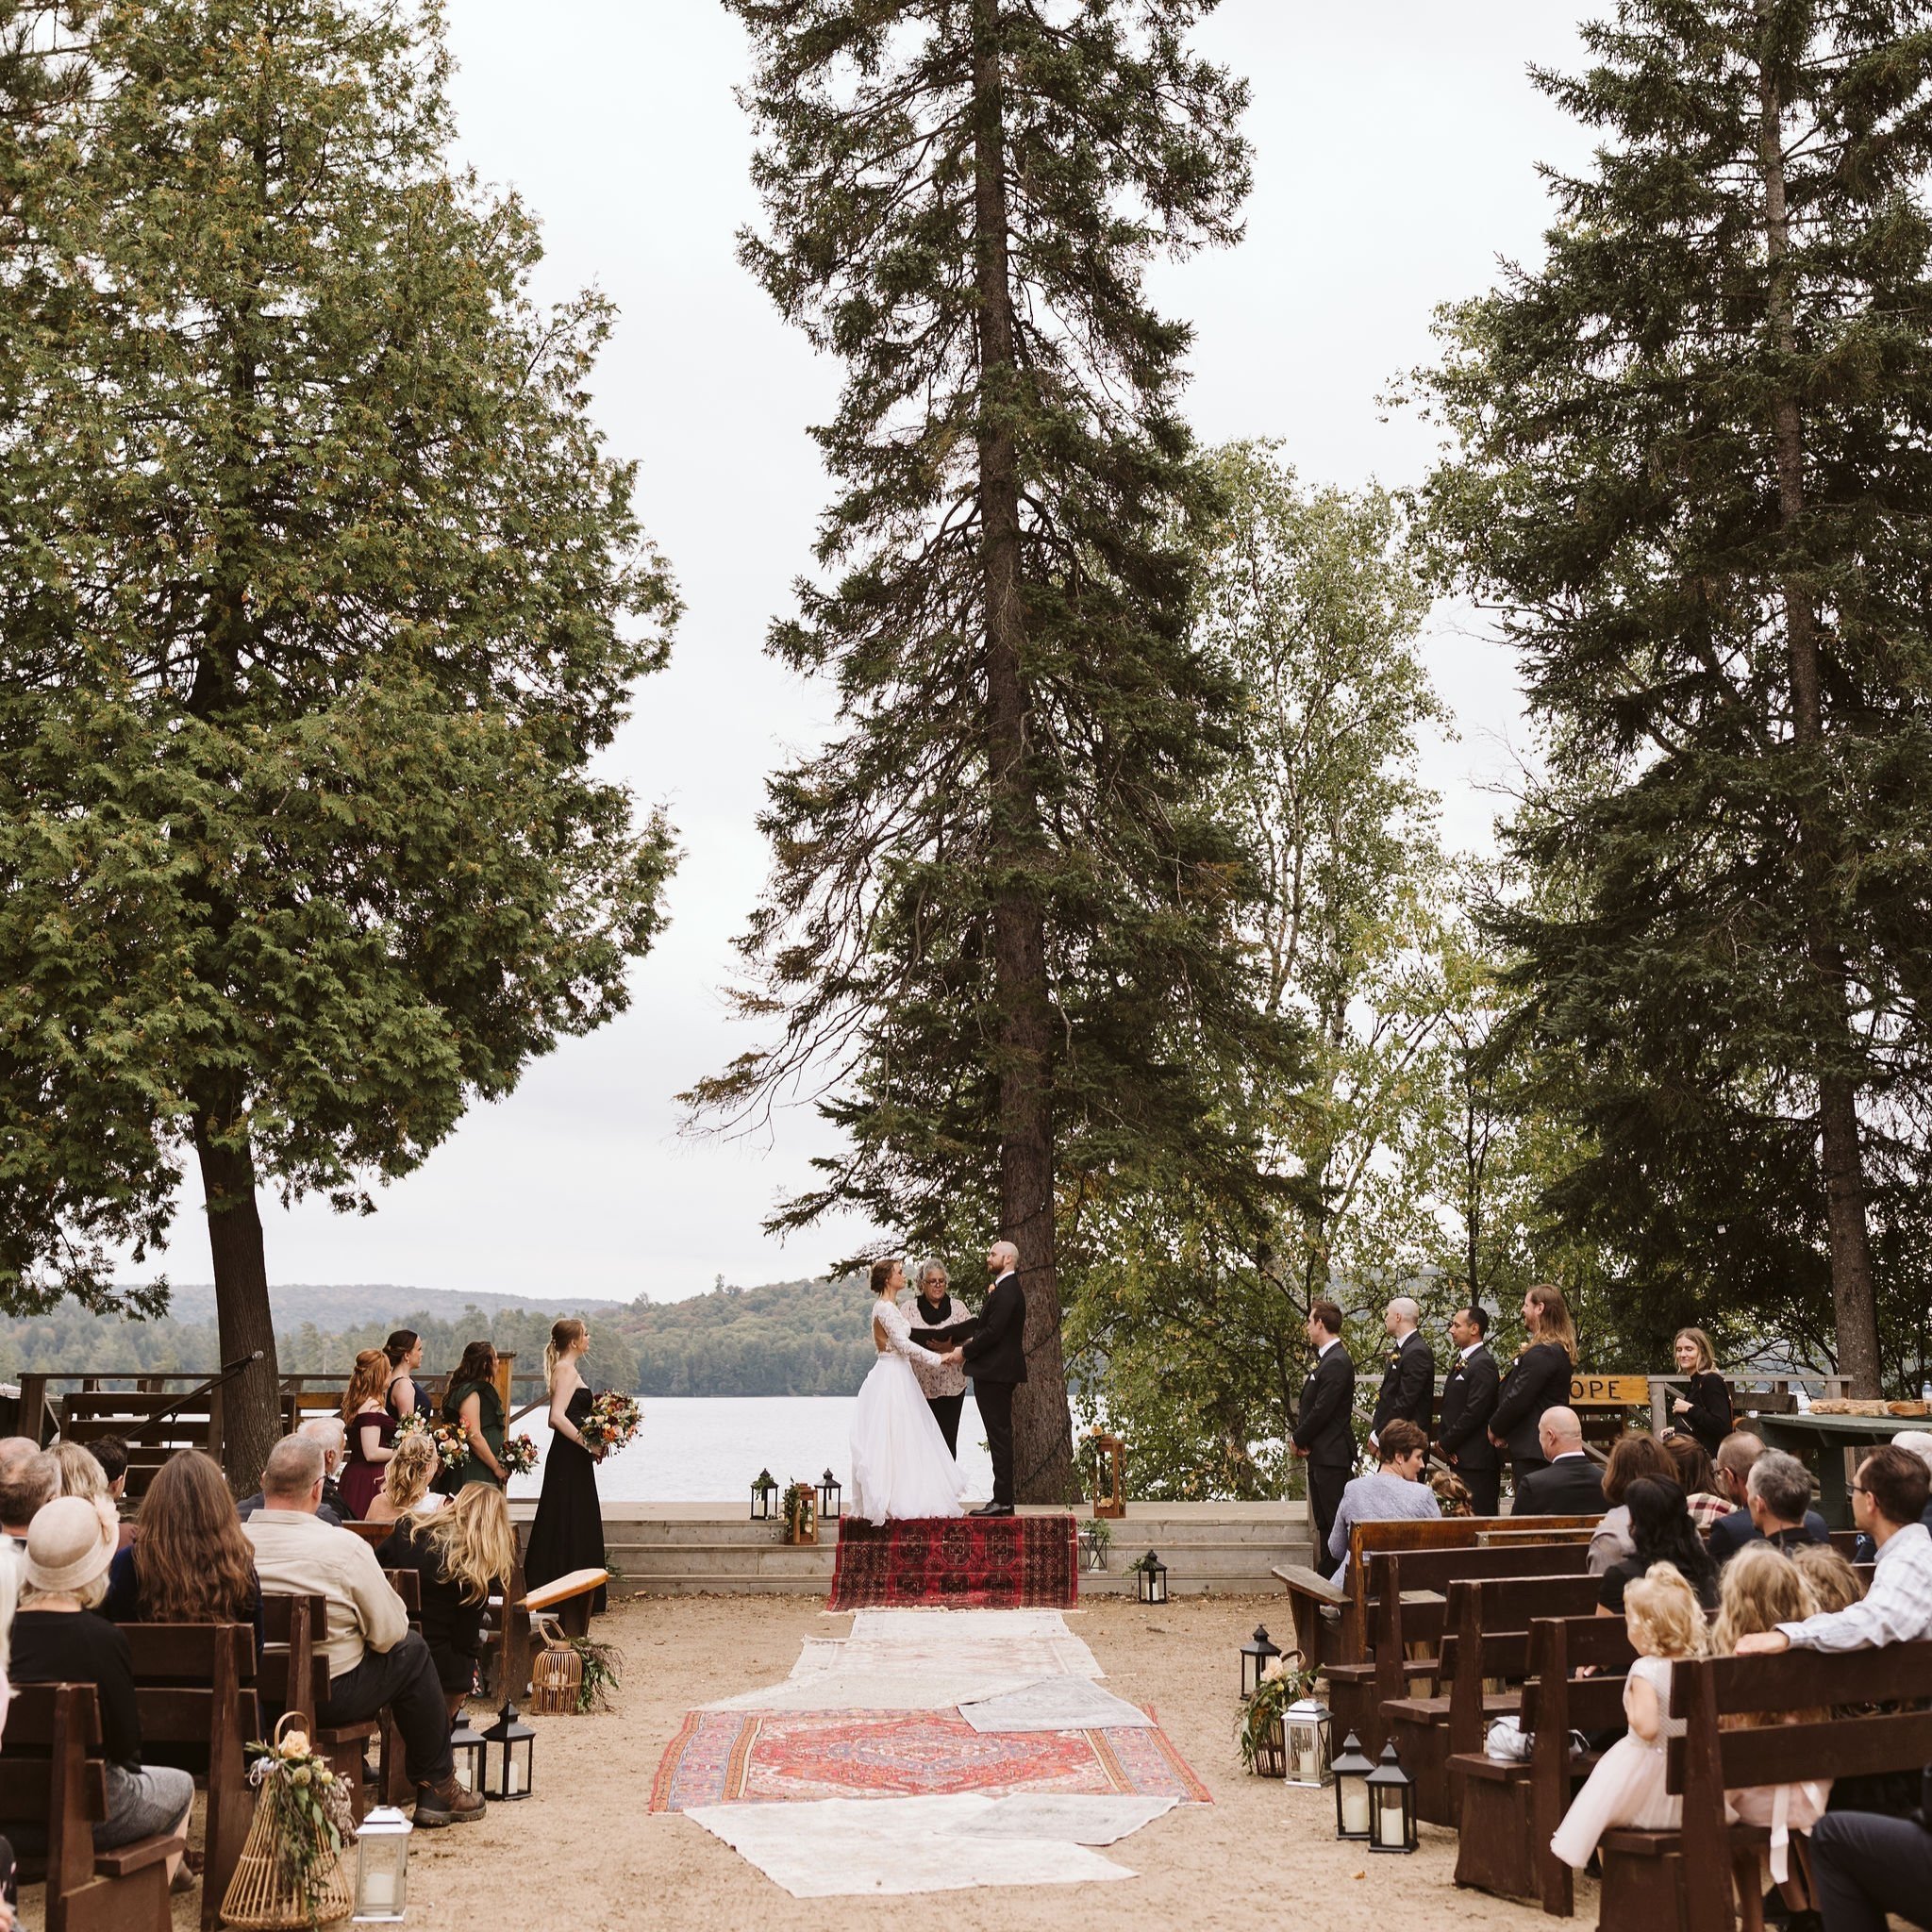 Outdoor bride in her linyage wedding separates